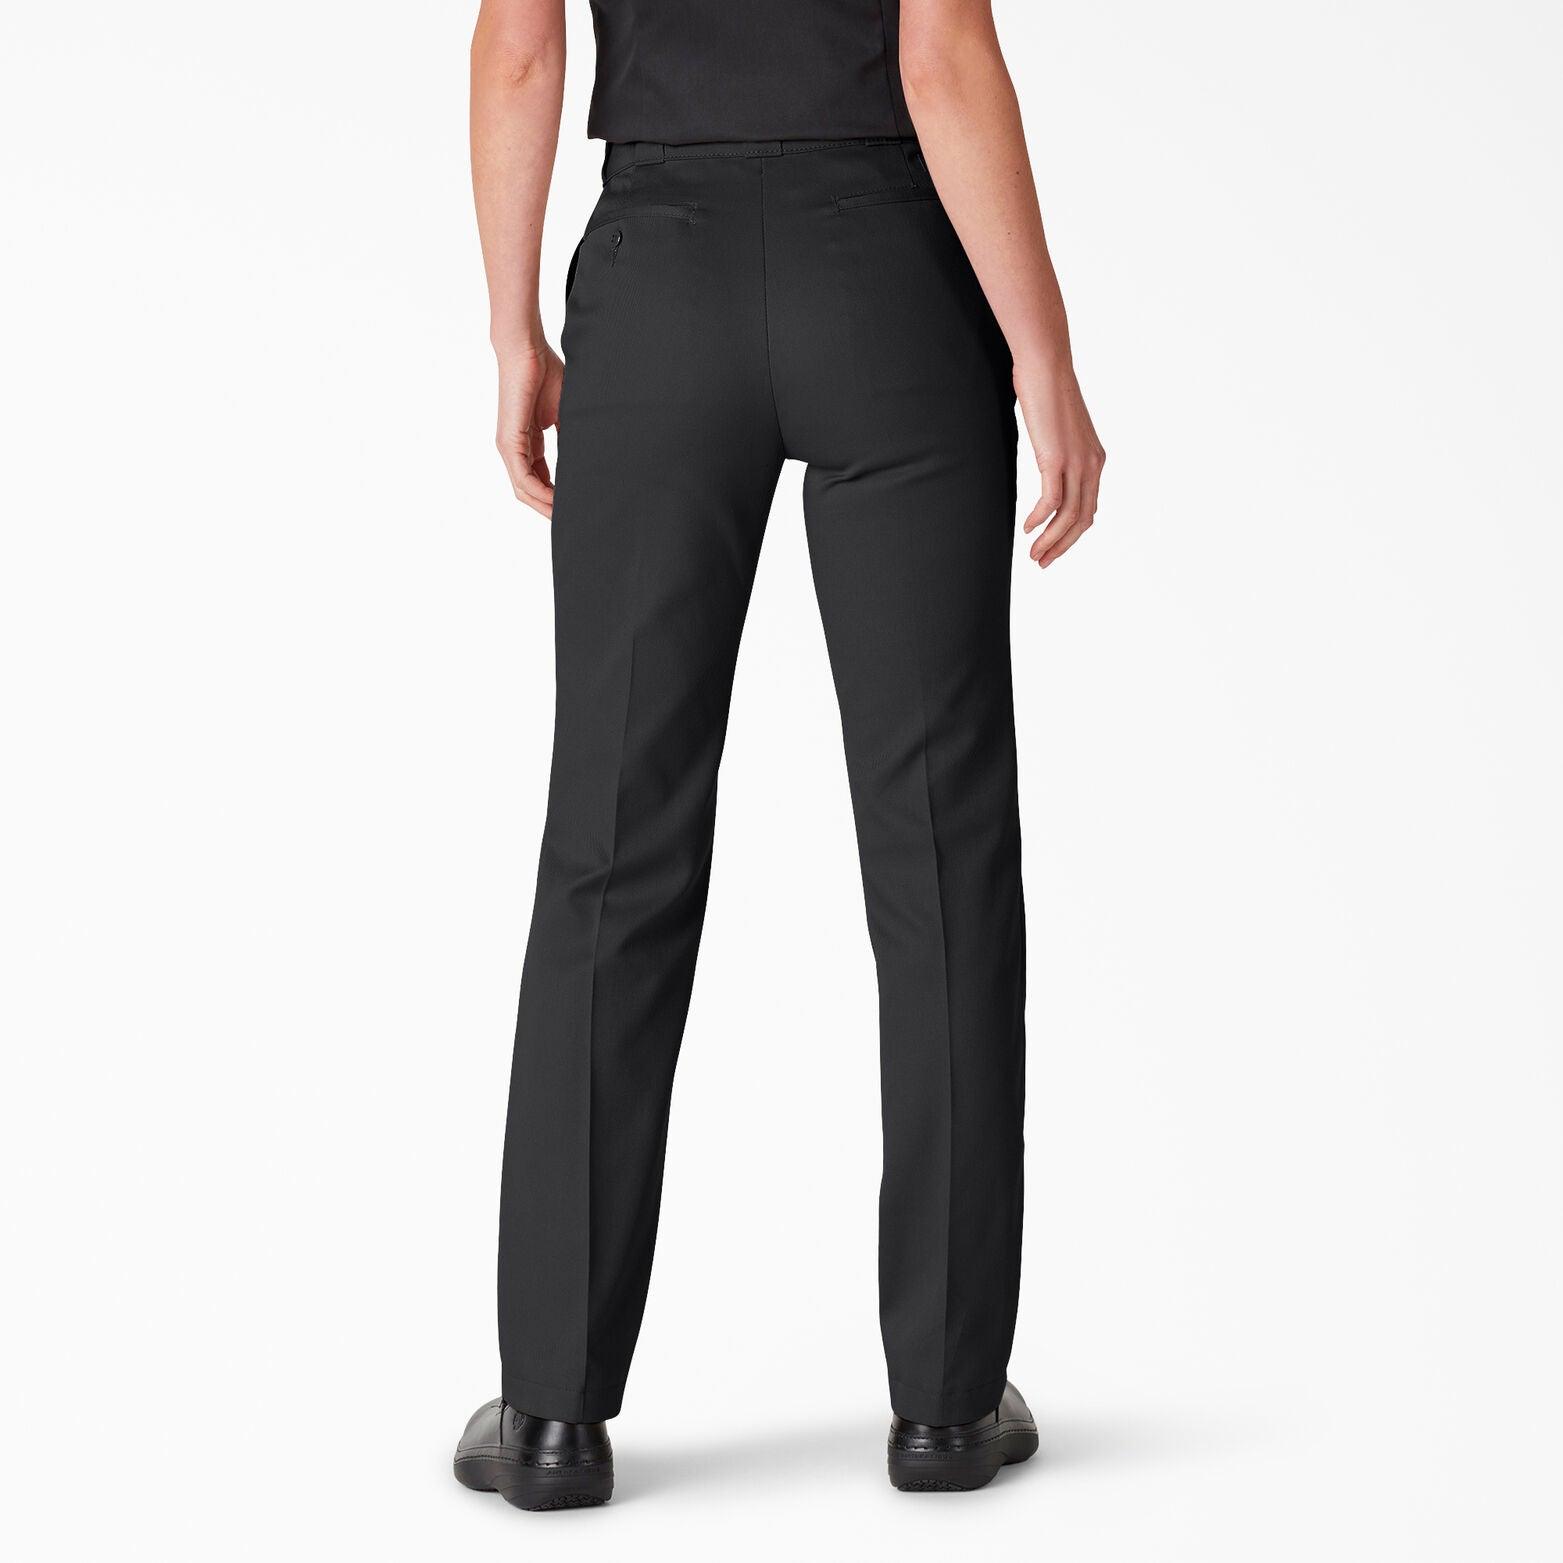 Women's FLEX Original Fit Work Pants - Black - Purpose-Built / Home of the Trades